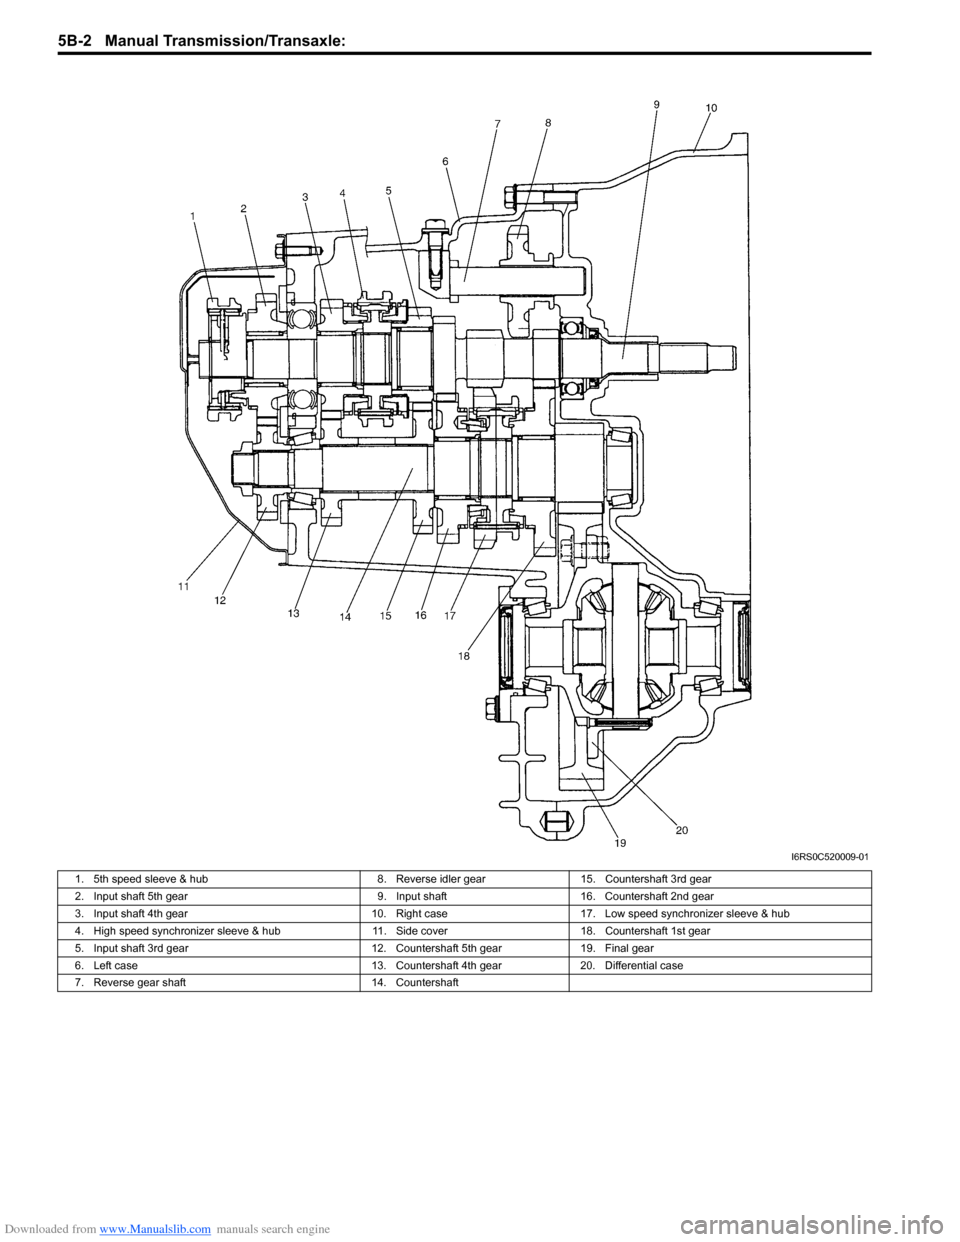 SUZUKI SWIFT 2007 2.G Service Workshop Manual Downloaded from www.Manualslib.com manuals search engine 5B-2 Manual Transmission/Transaxle: 
I6RS0C520009-01
1. 5th speed sleeve & hub8. Reverse idler gear15. Countershaft 3rd gear
2. Input shaft 5th